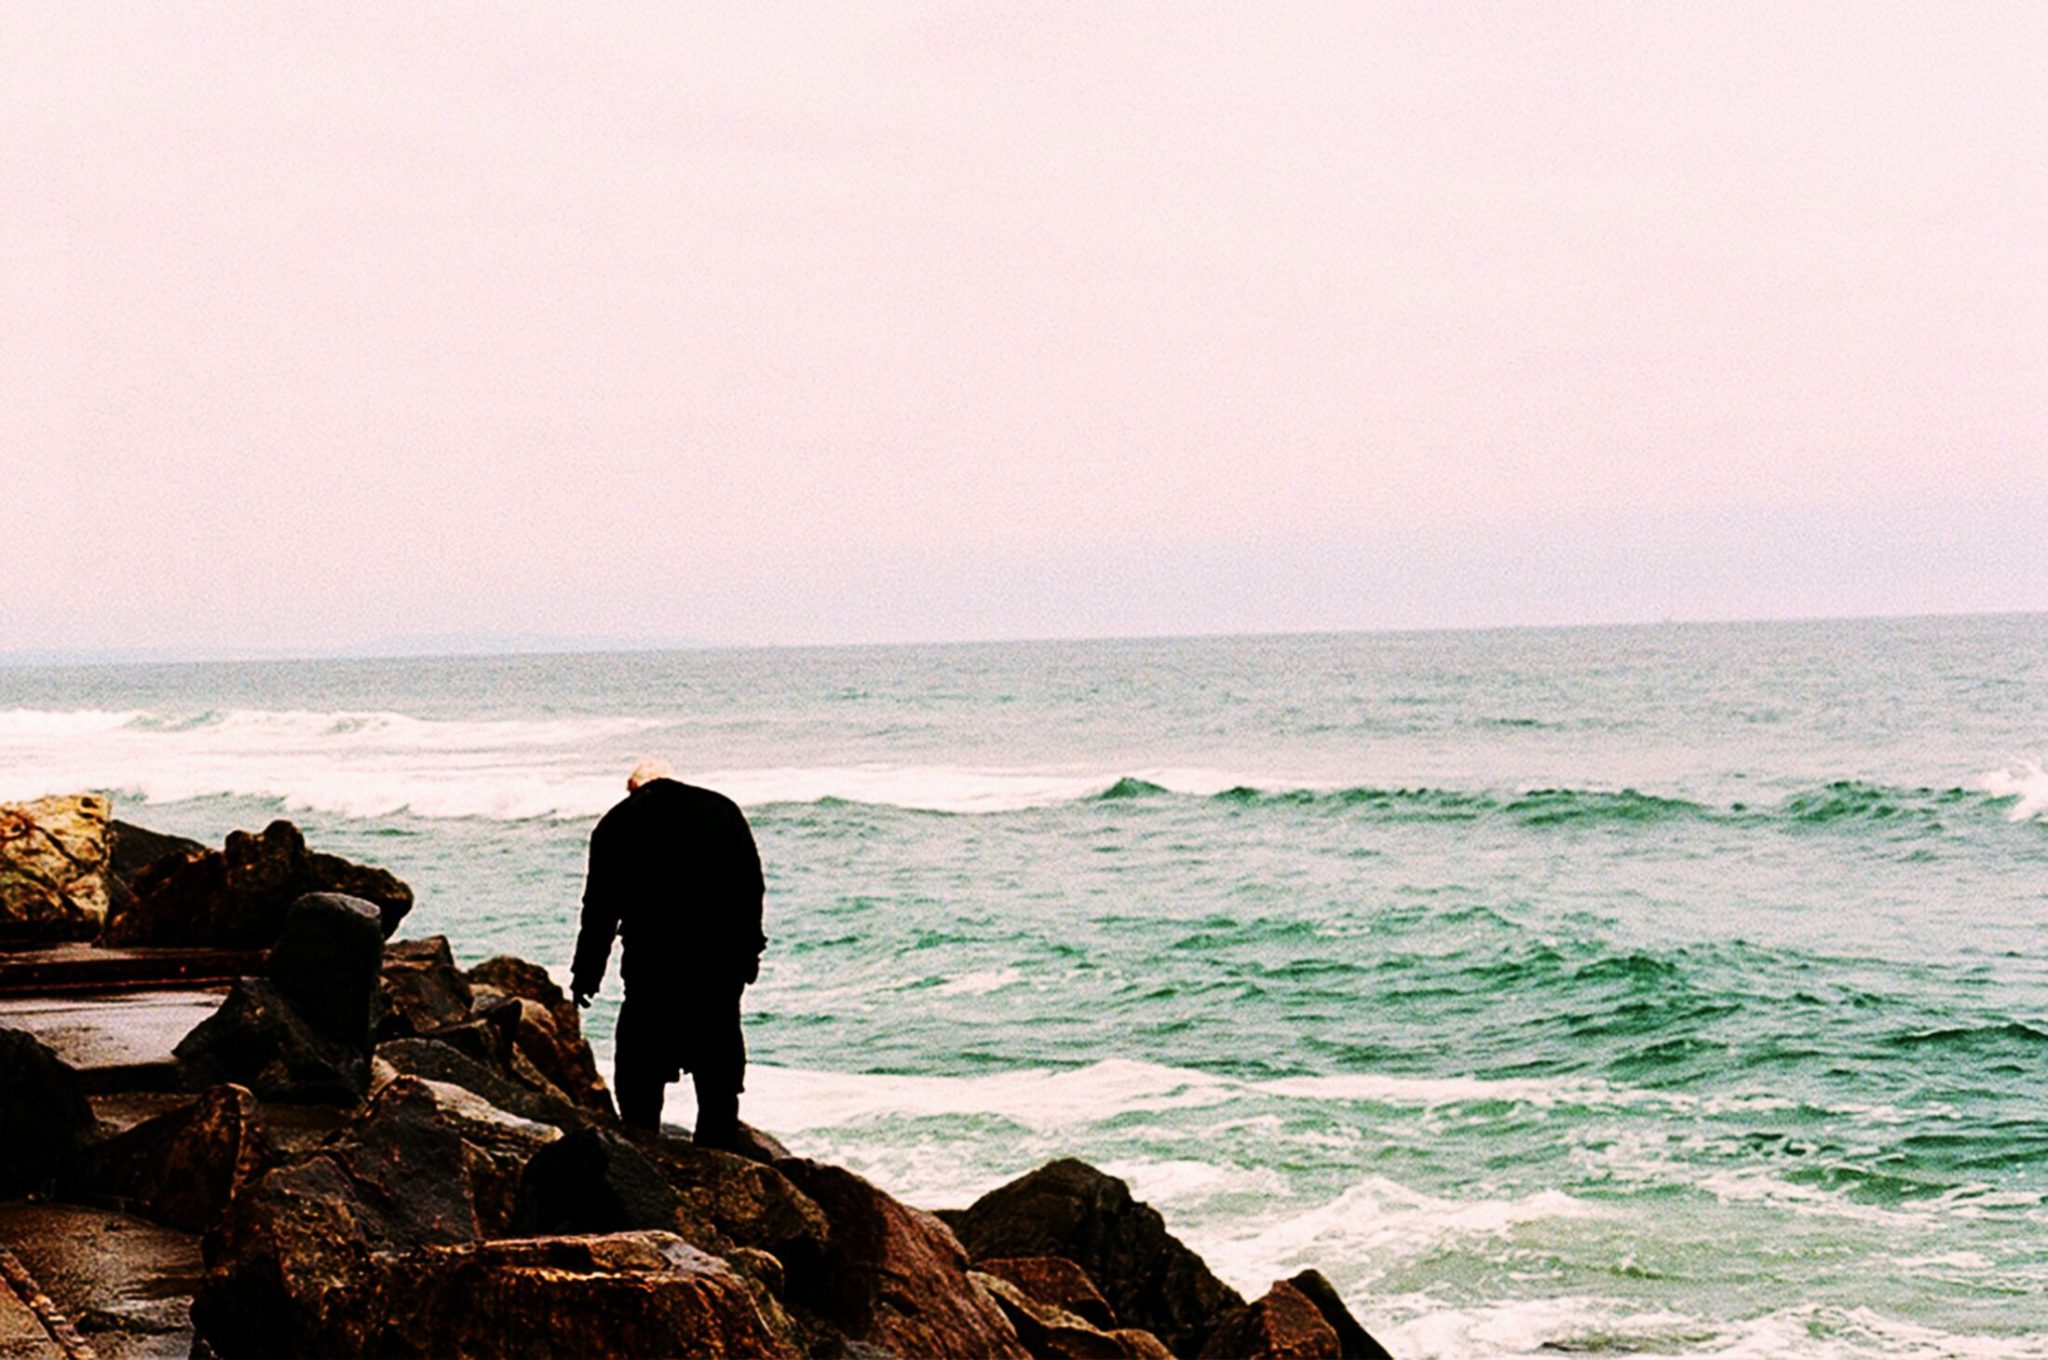 An elderly man stands on the rocks near the ocean